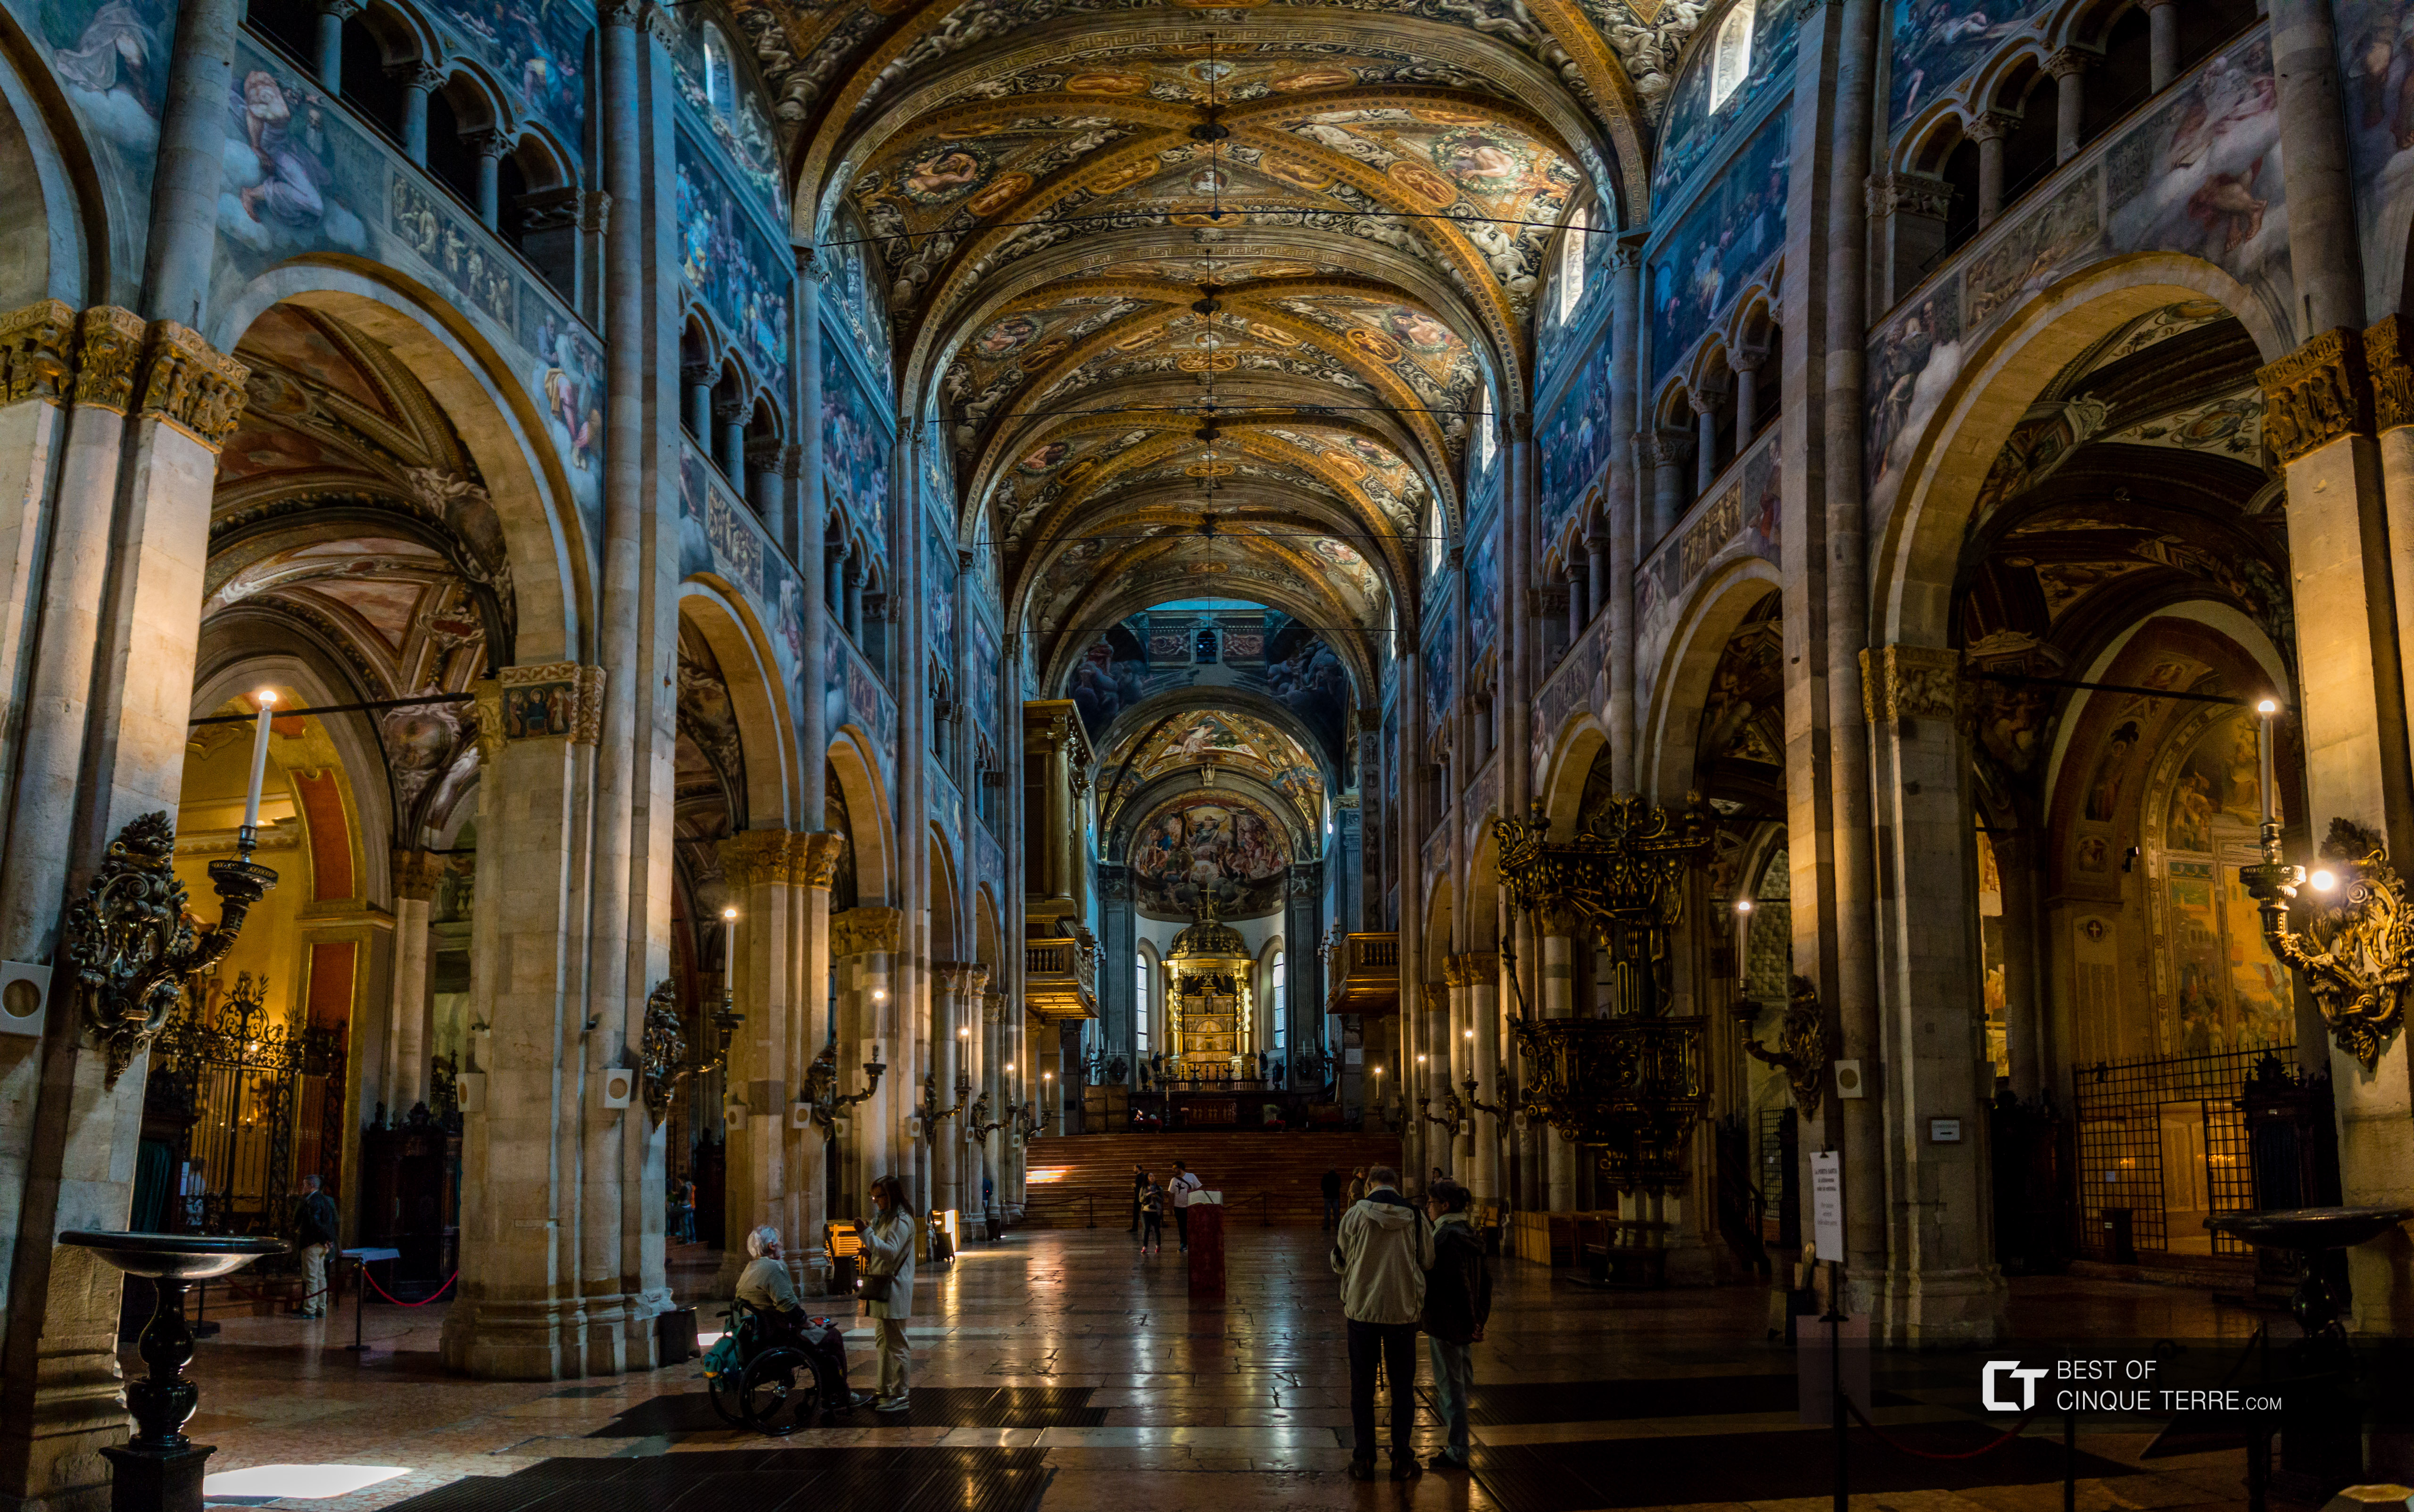 Interiorul Duomo, Parma, Italia